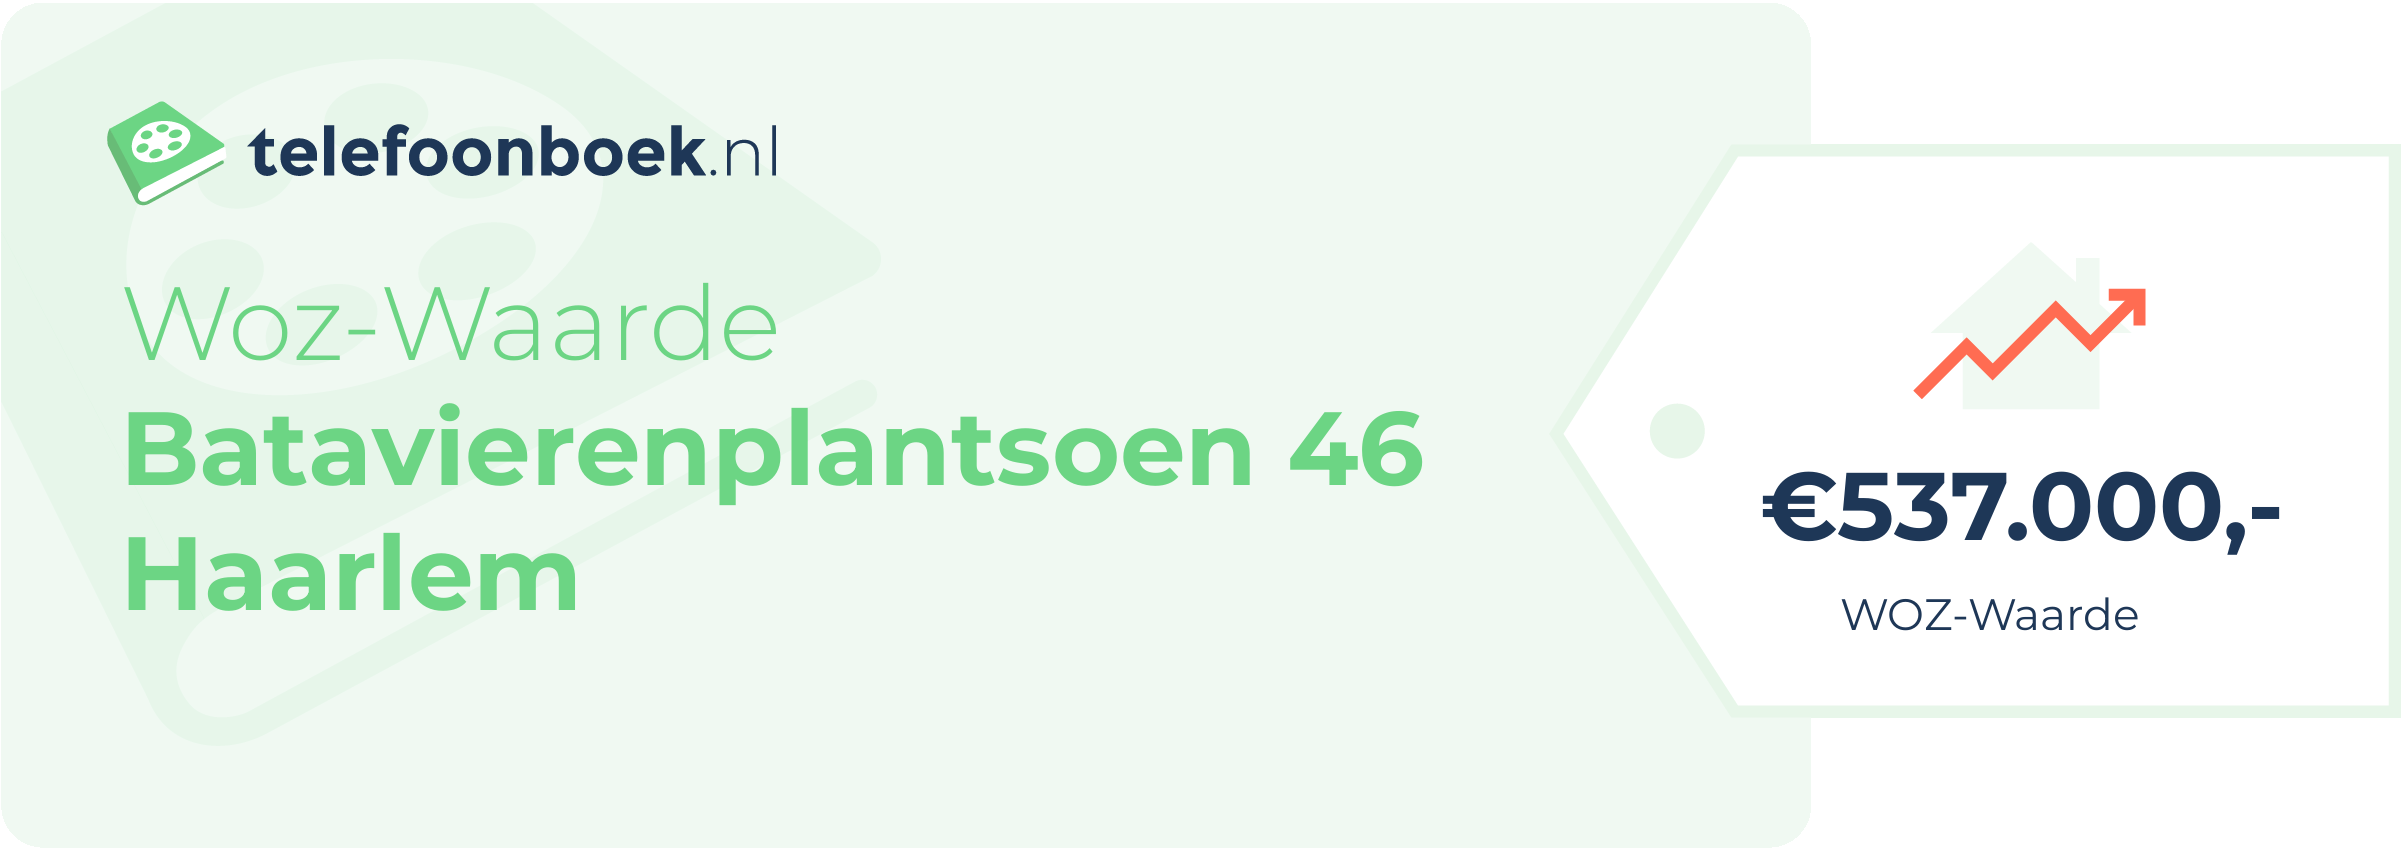 WOZ-waarde Batavierenplantsoen 46 Haarlem